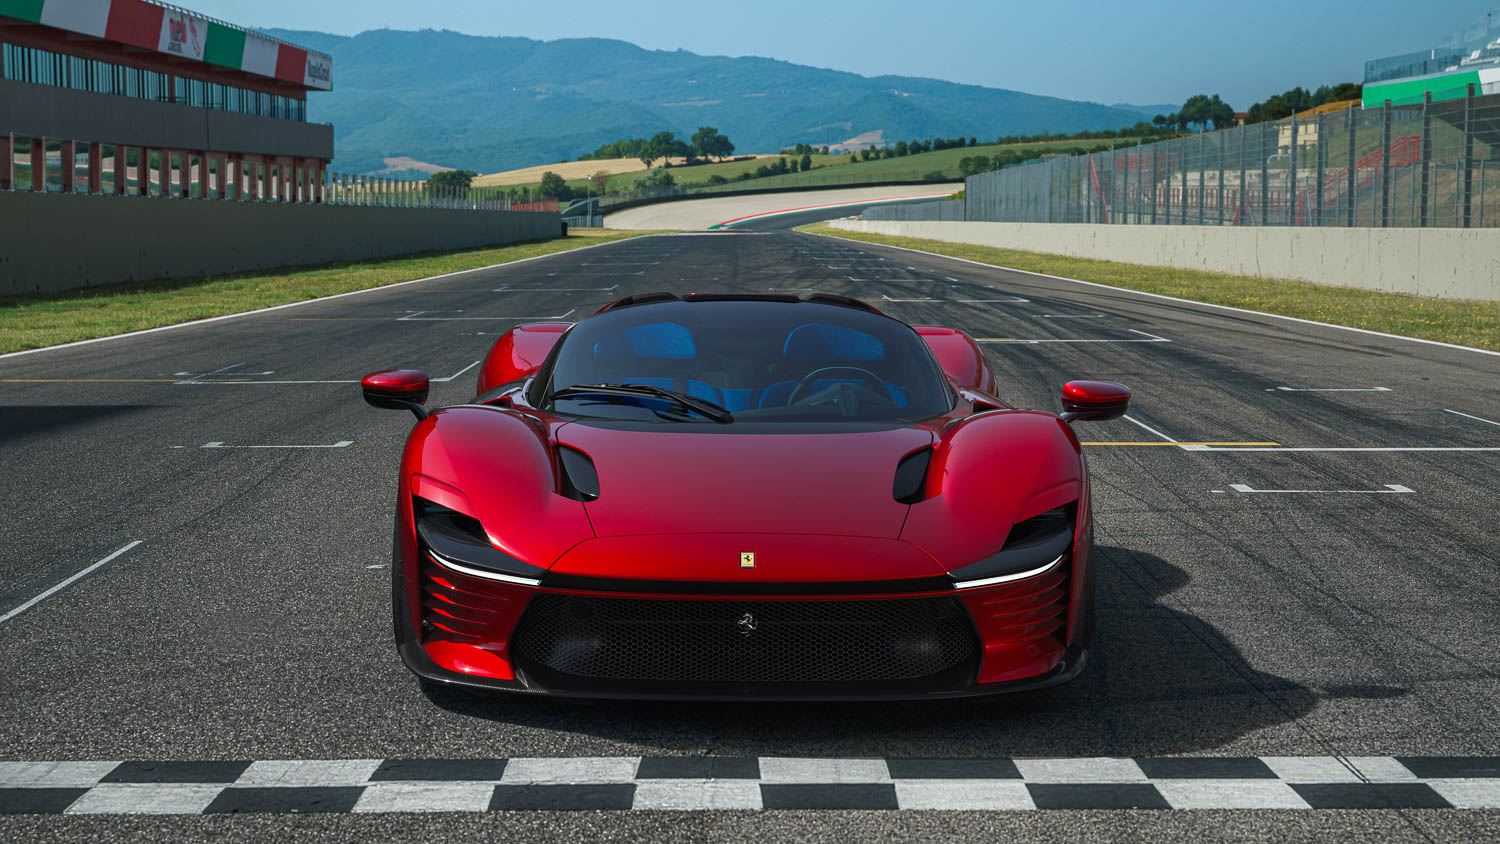 Ferrari Daytona SP3 a stunning homage to famous sports prototypes. Image by Ferrari.